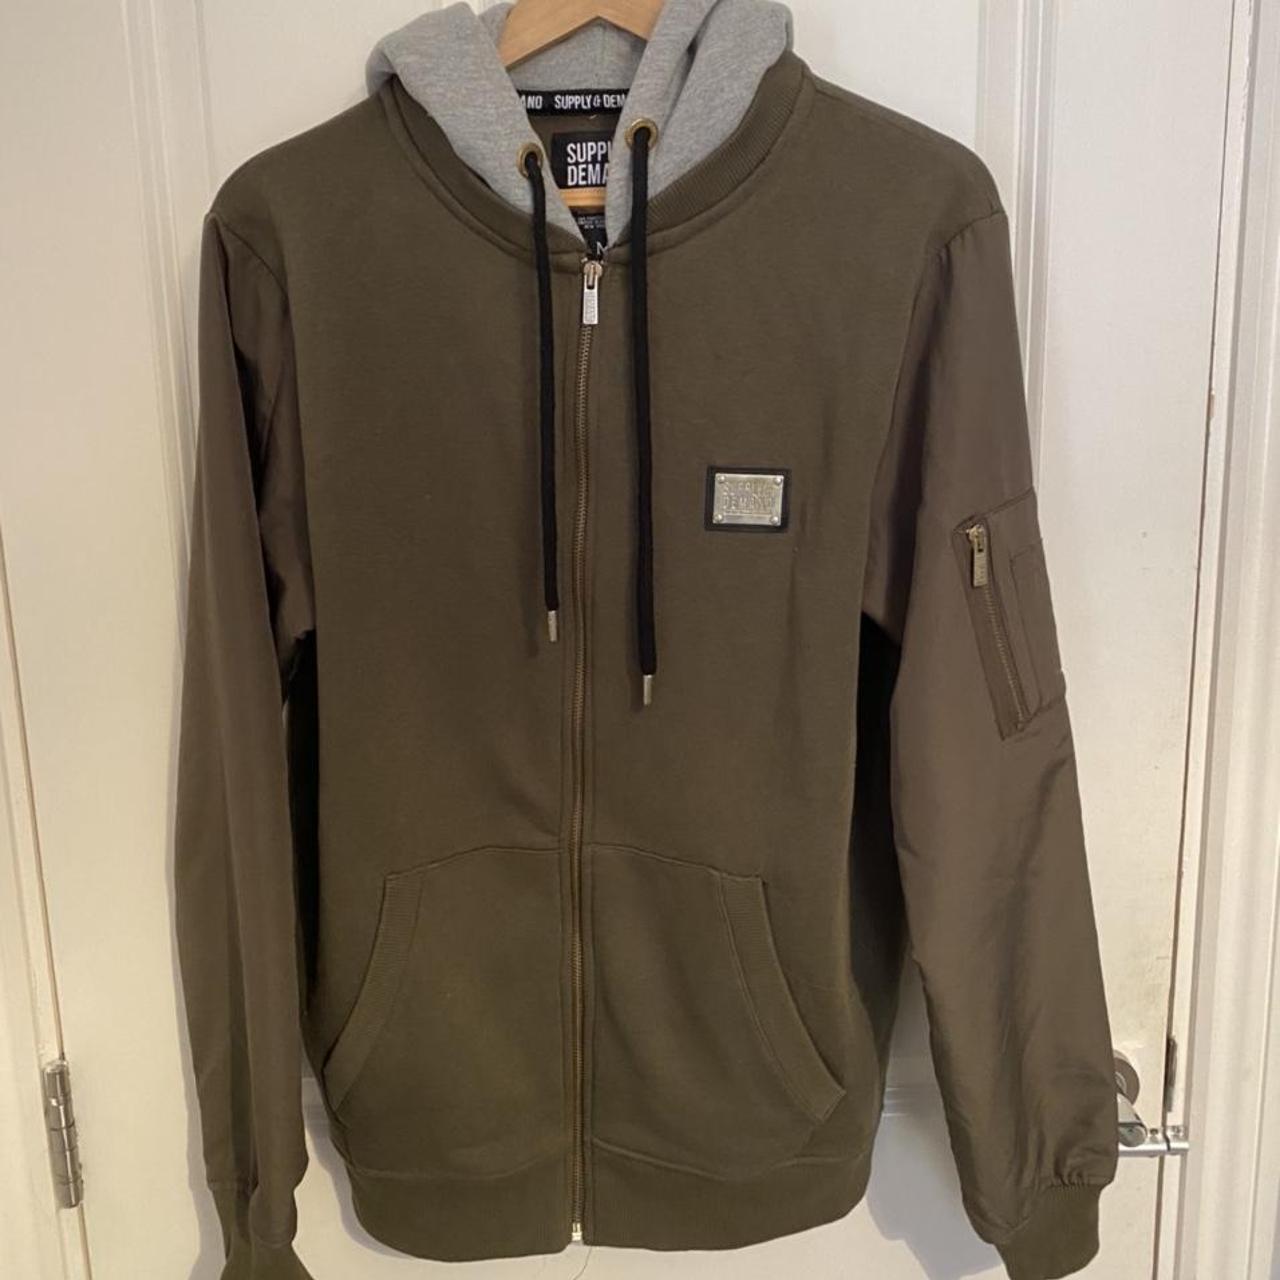 Supply and demand green zipper hoodie/jacket, UK... - Depop